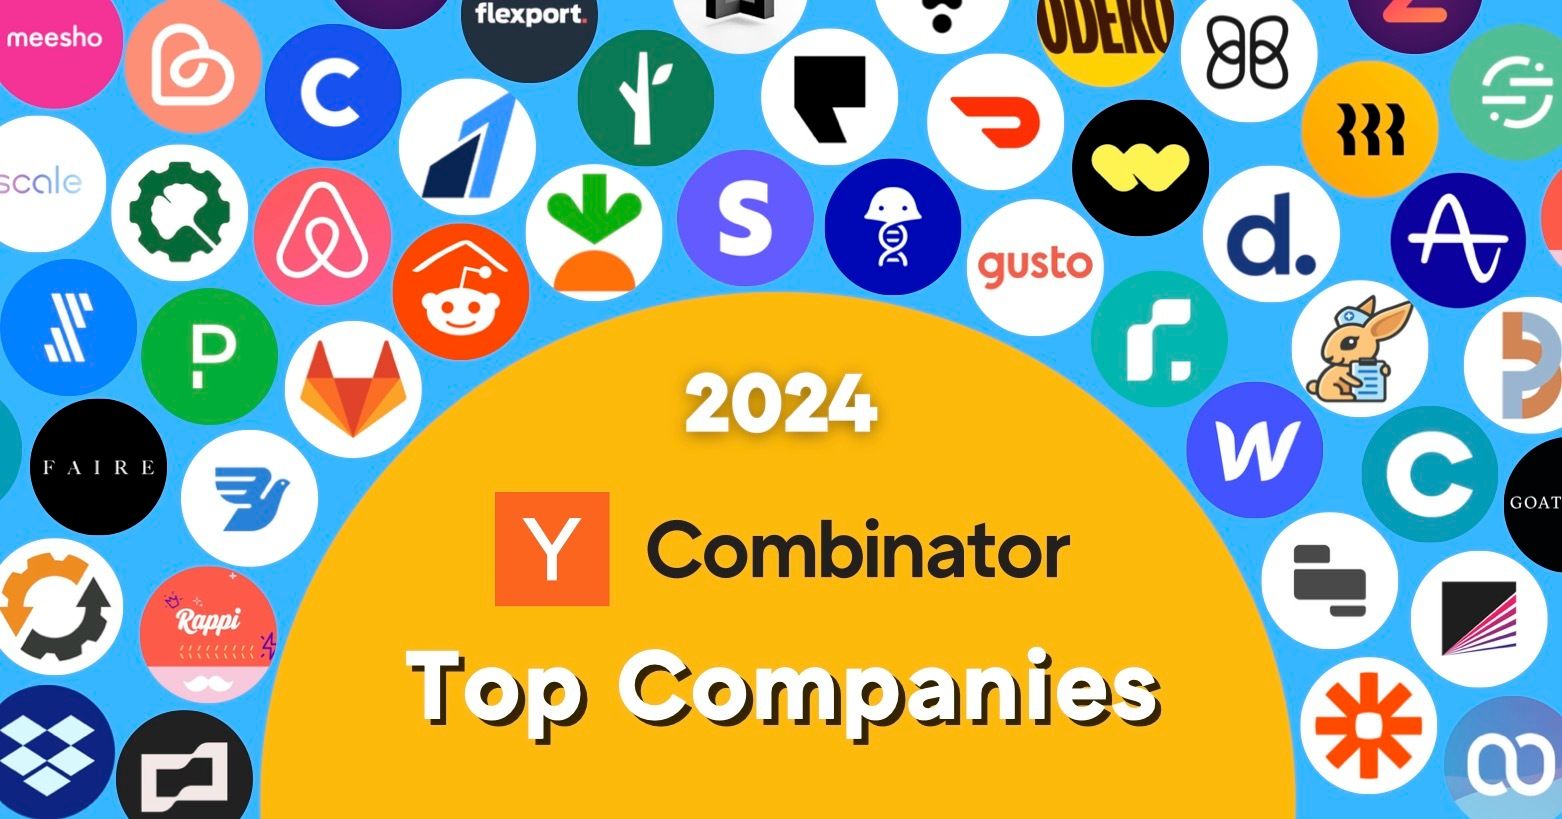 The text "2024 Y Combinator Top Companies" below a set of YC company logos